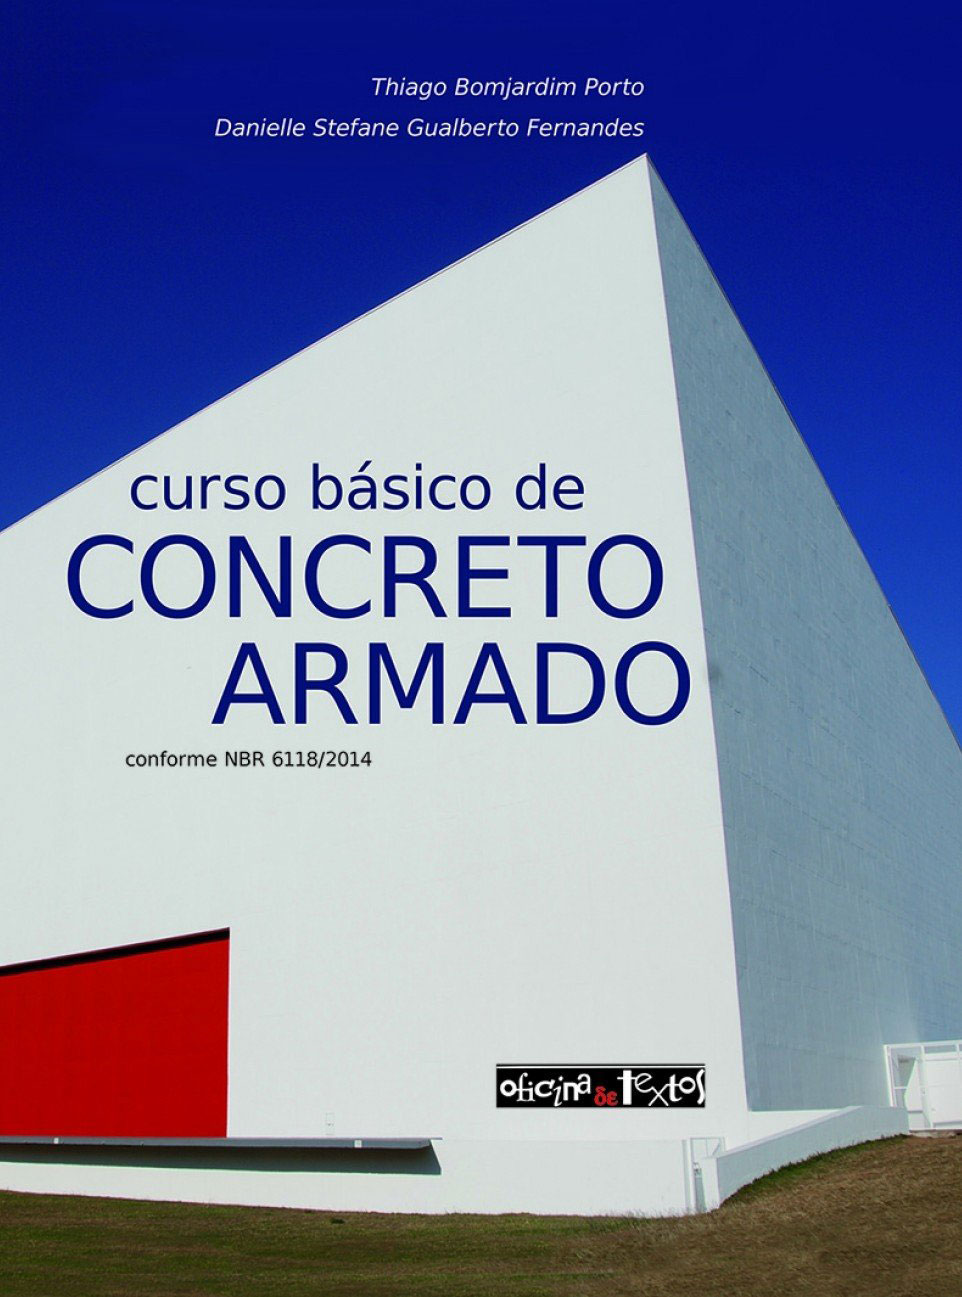 Curso básico de concreto armado: conforme NBR 6118/2014 - Thiago Bomjardim Porto, Danielle Stefane Gualberto Fernandes